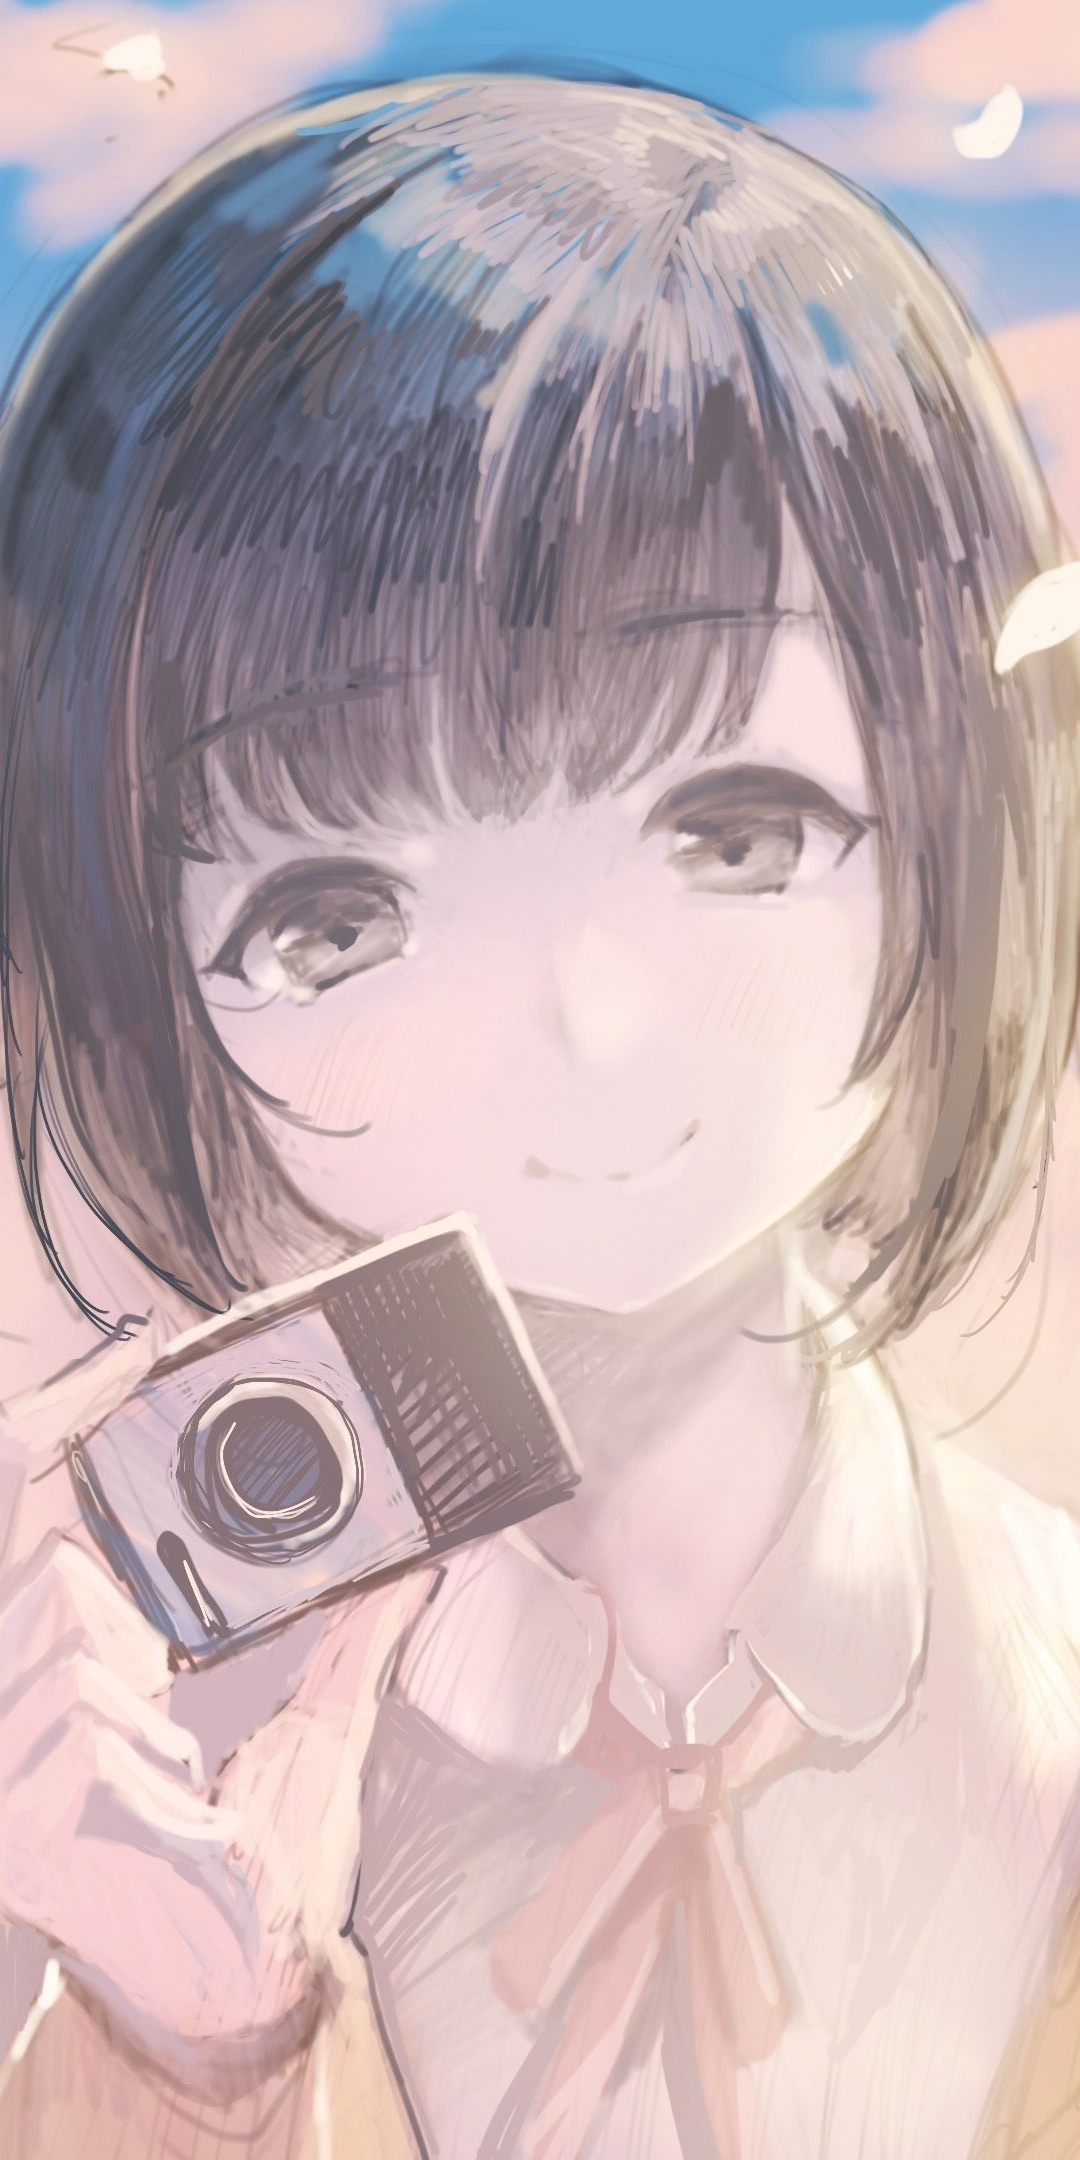 Anime girl, camera, cute, 1080x2160 wallpaper